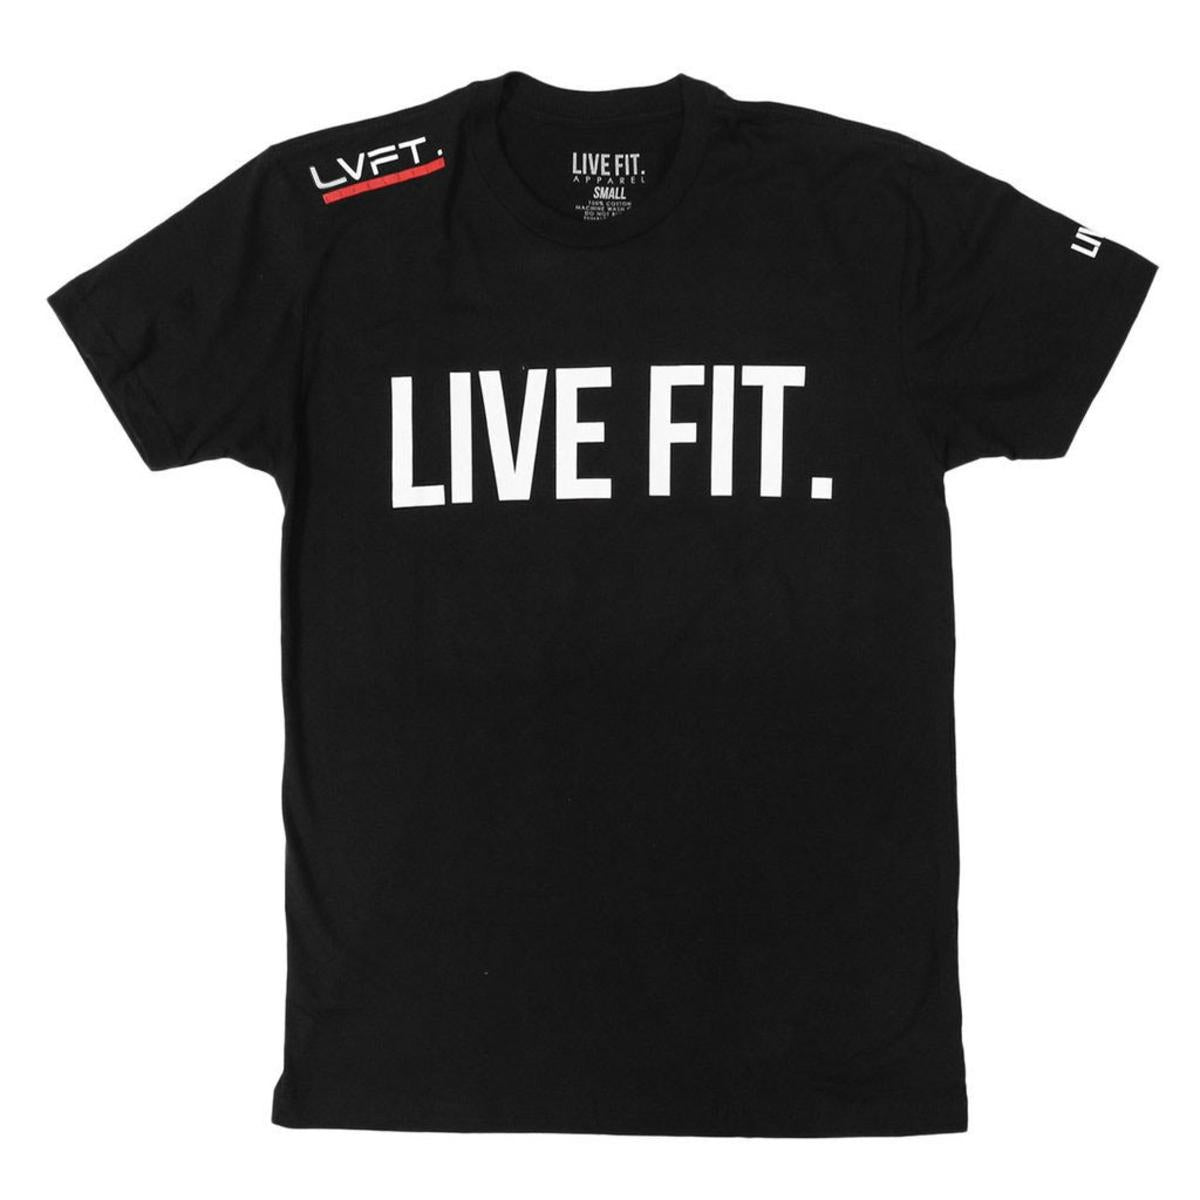 Live Fit, Shirts, Lvft Lifestyle Performance Shirt